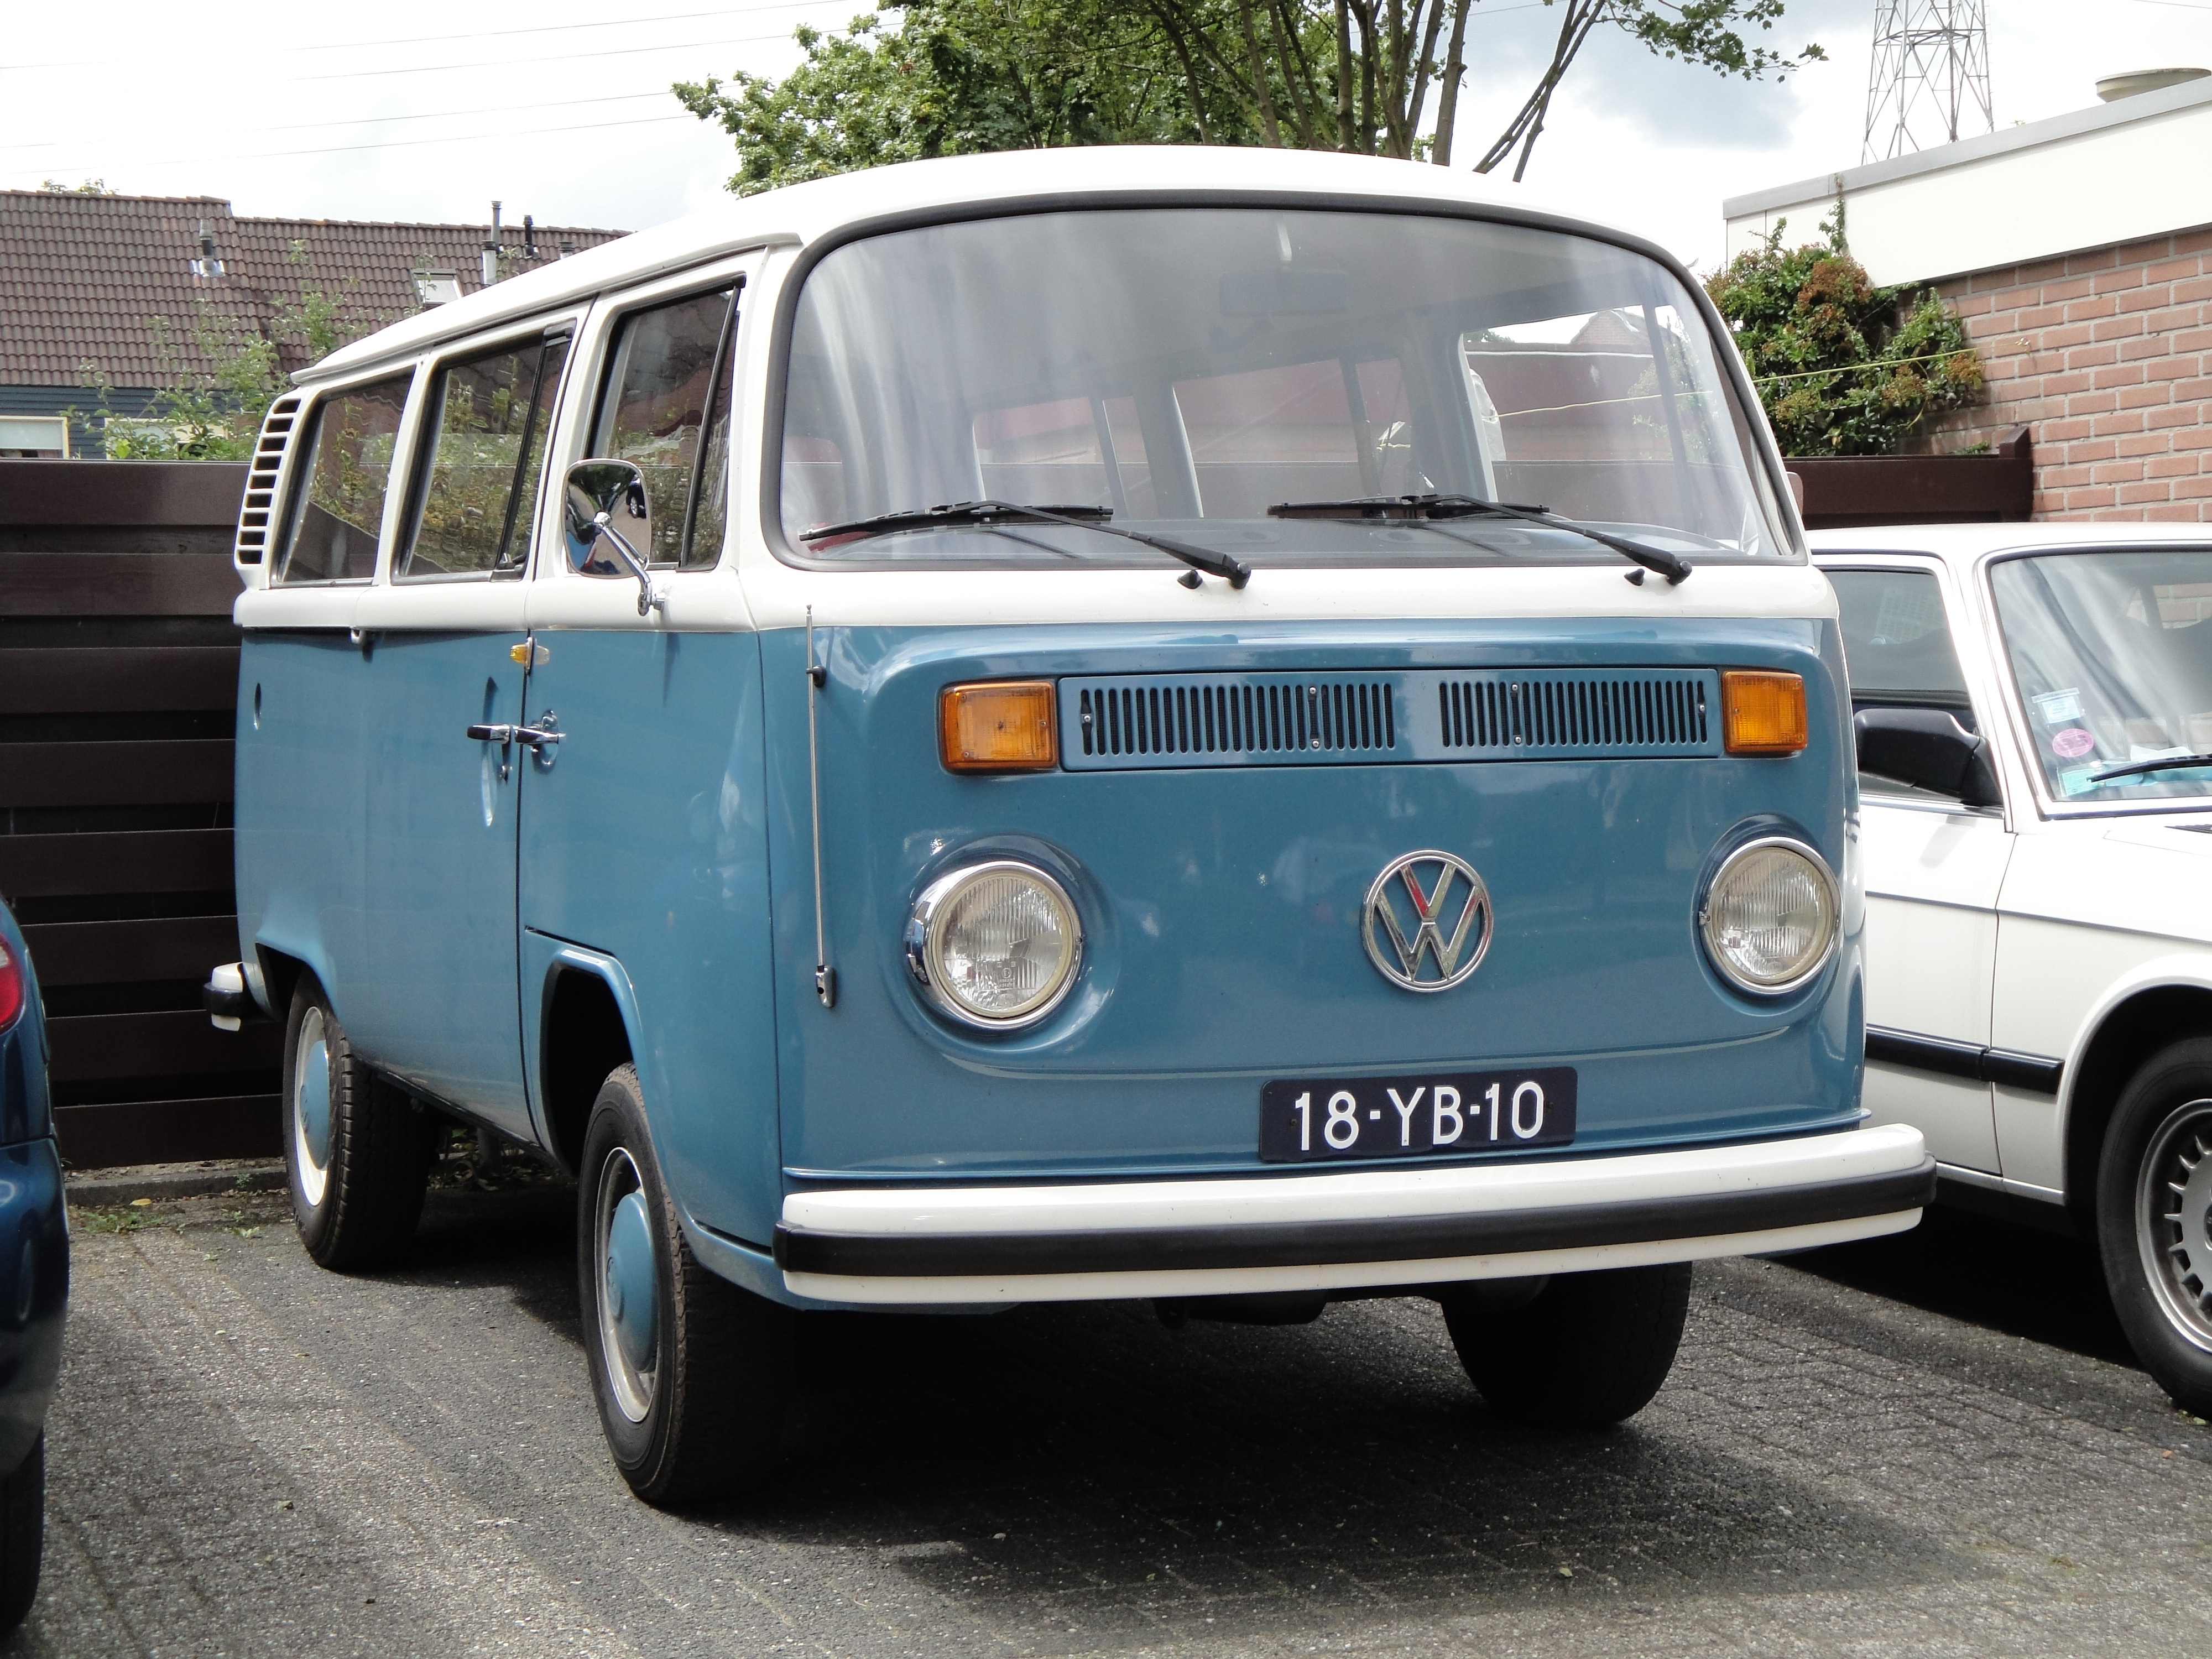 Volkswagen T2 Bus 18-YB-10 | Flickr - Photo Sharing!